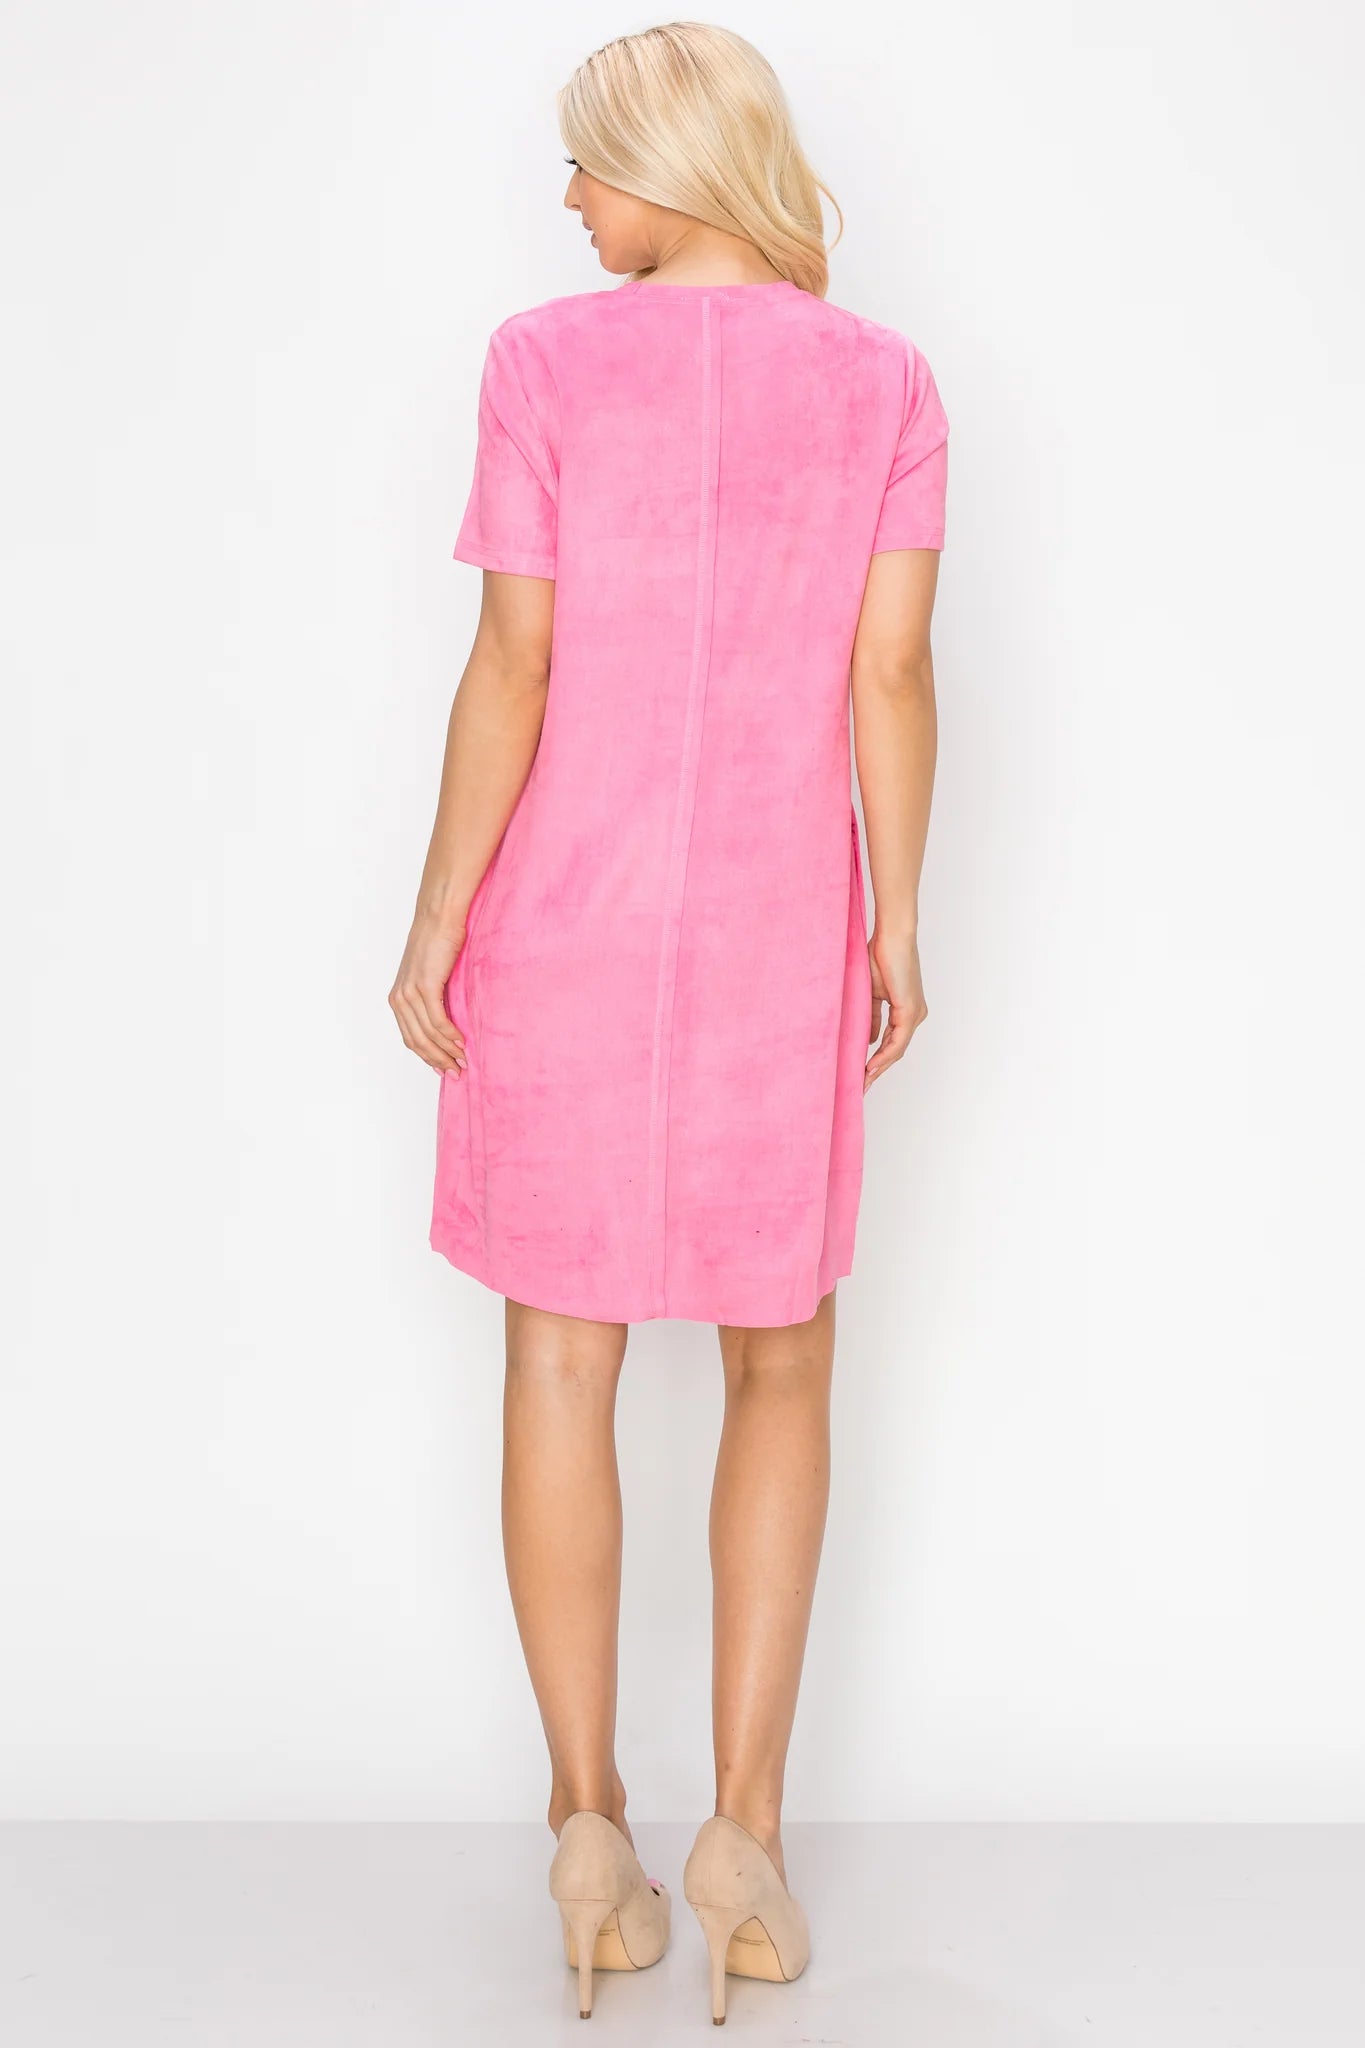 Audrey Short Sleeve Suede Dress - Fuchsia Pink Mini Dresses JOH Apparel   